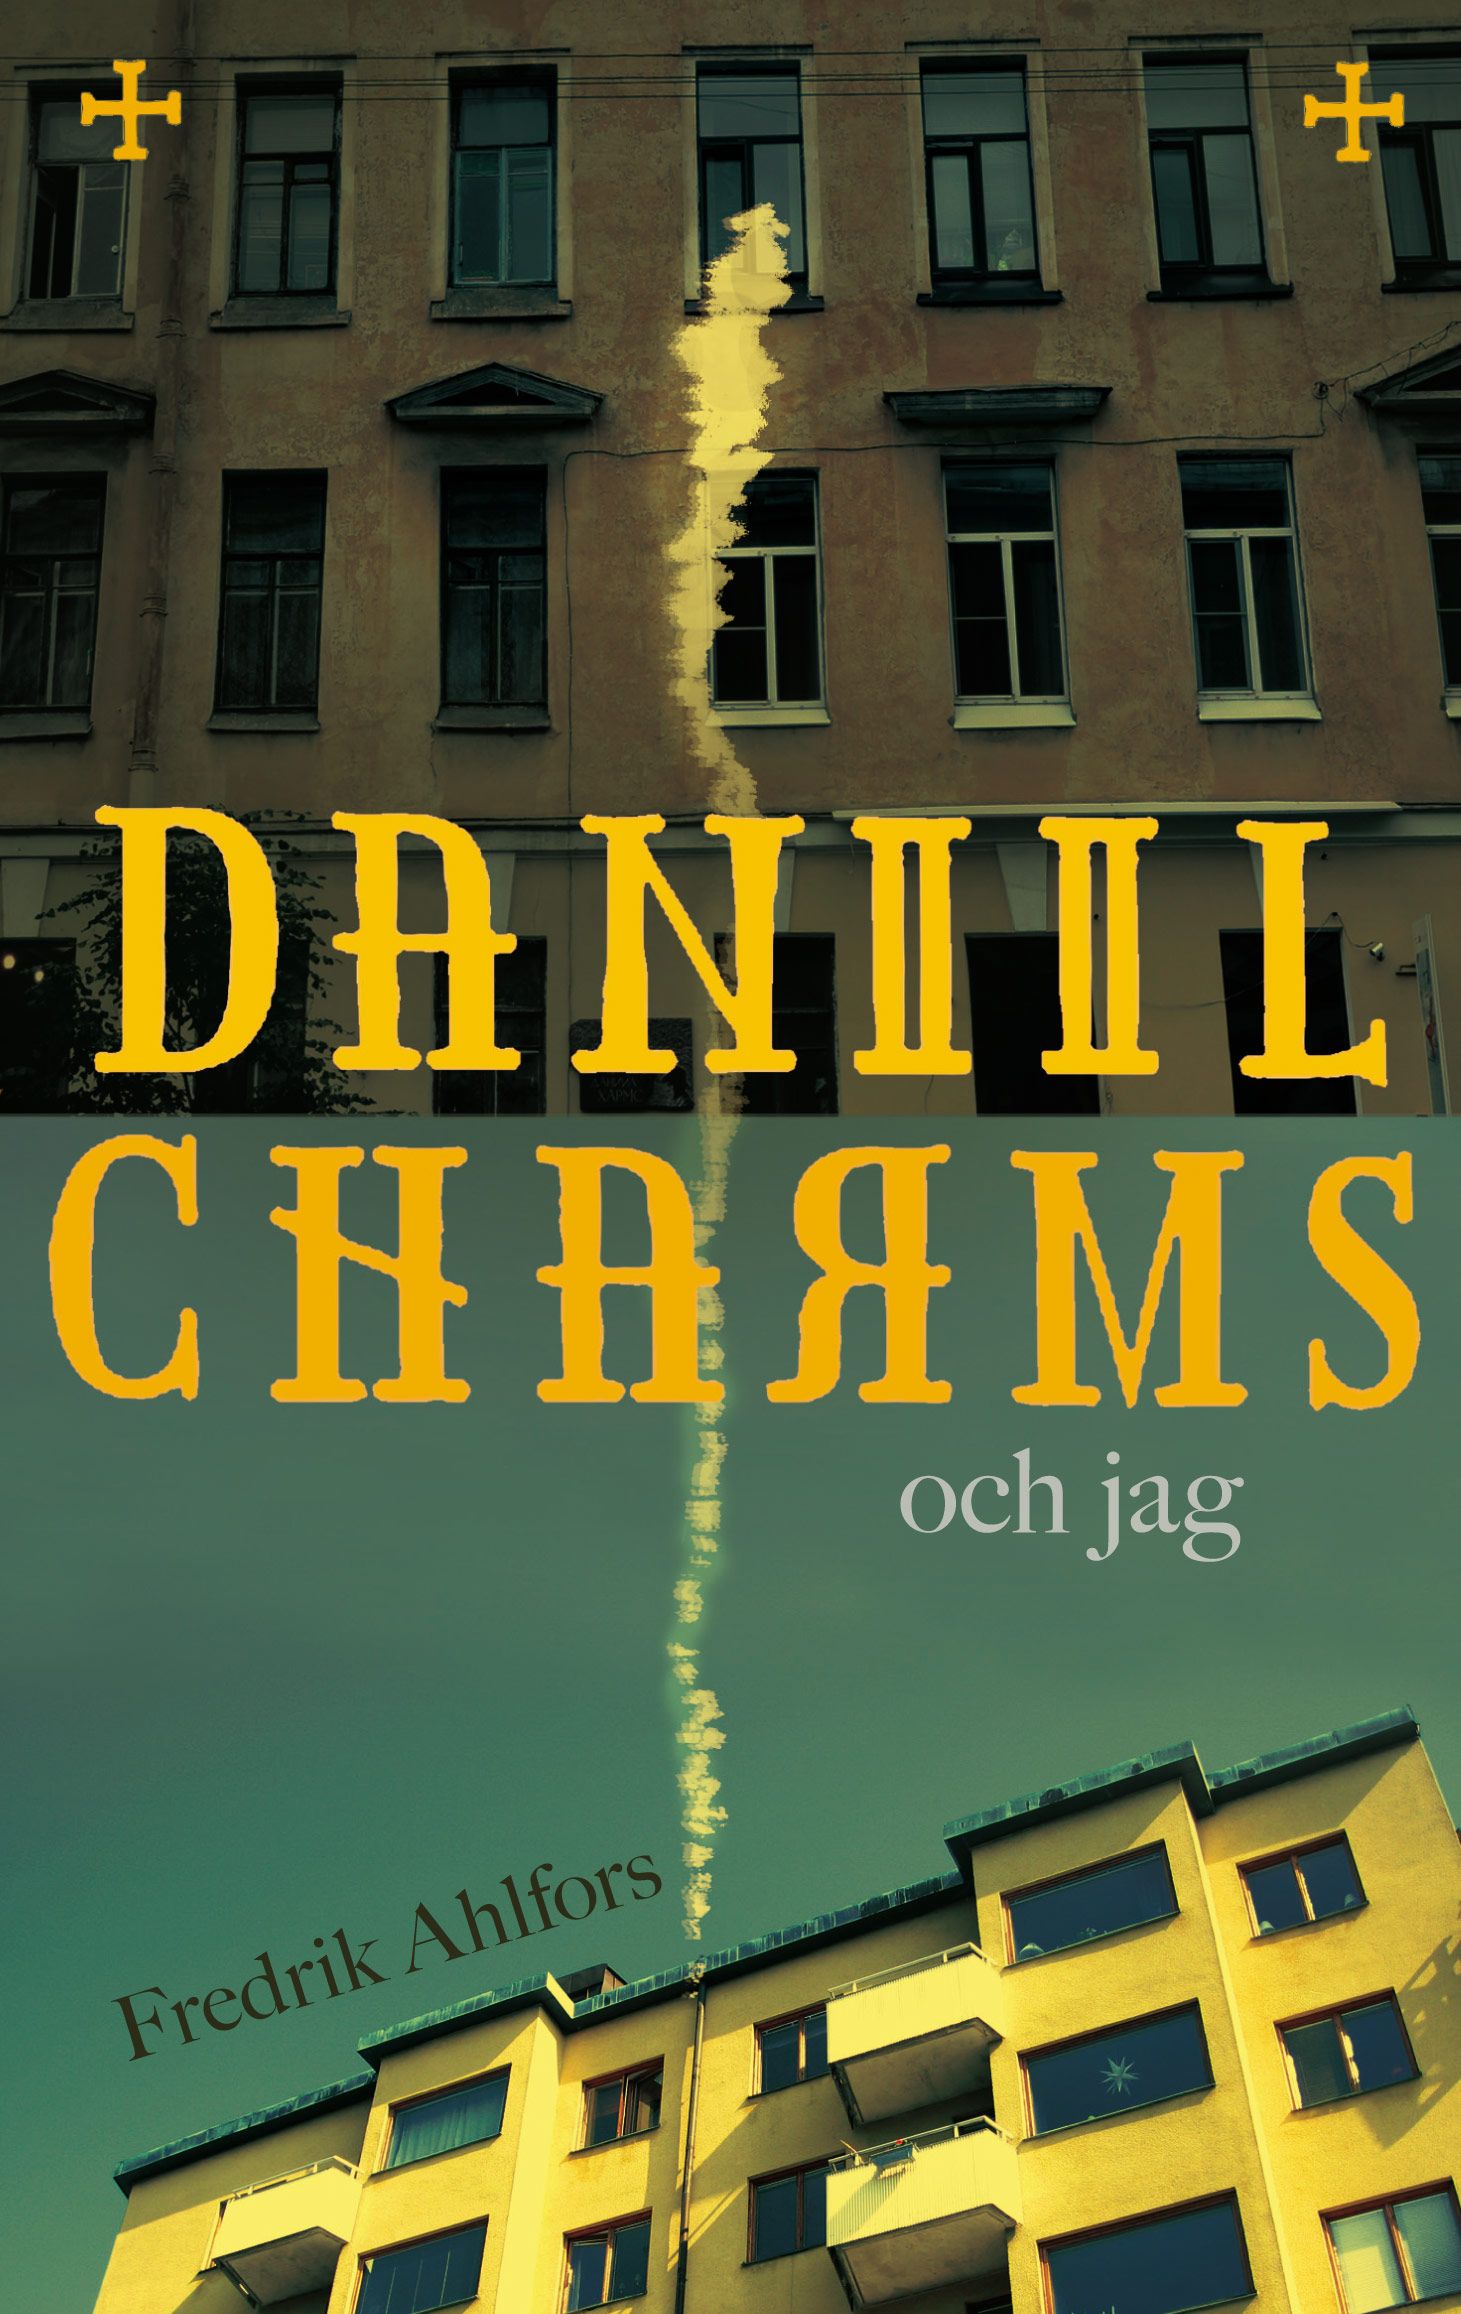 Daniil Charms och jag, eBook by Fredrik Ahlfors